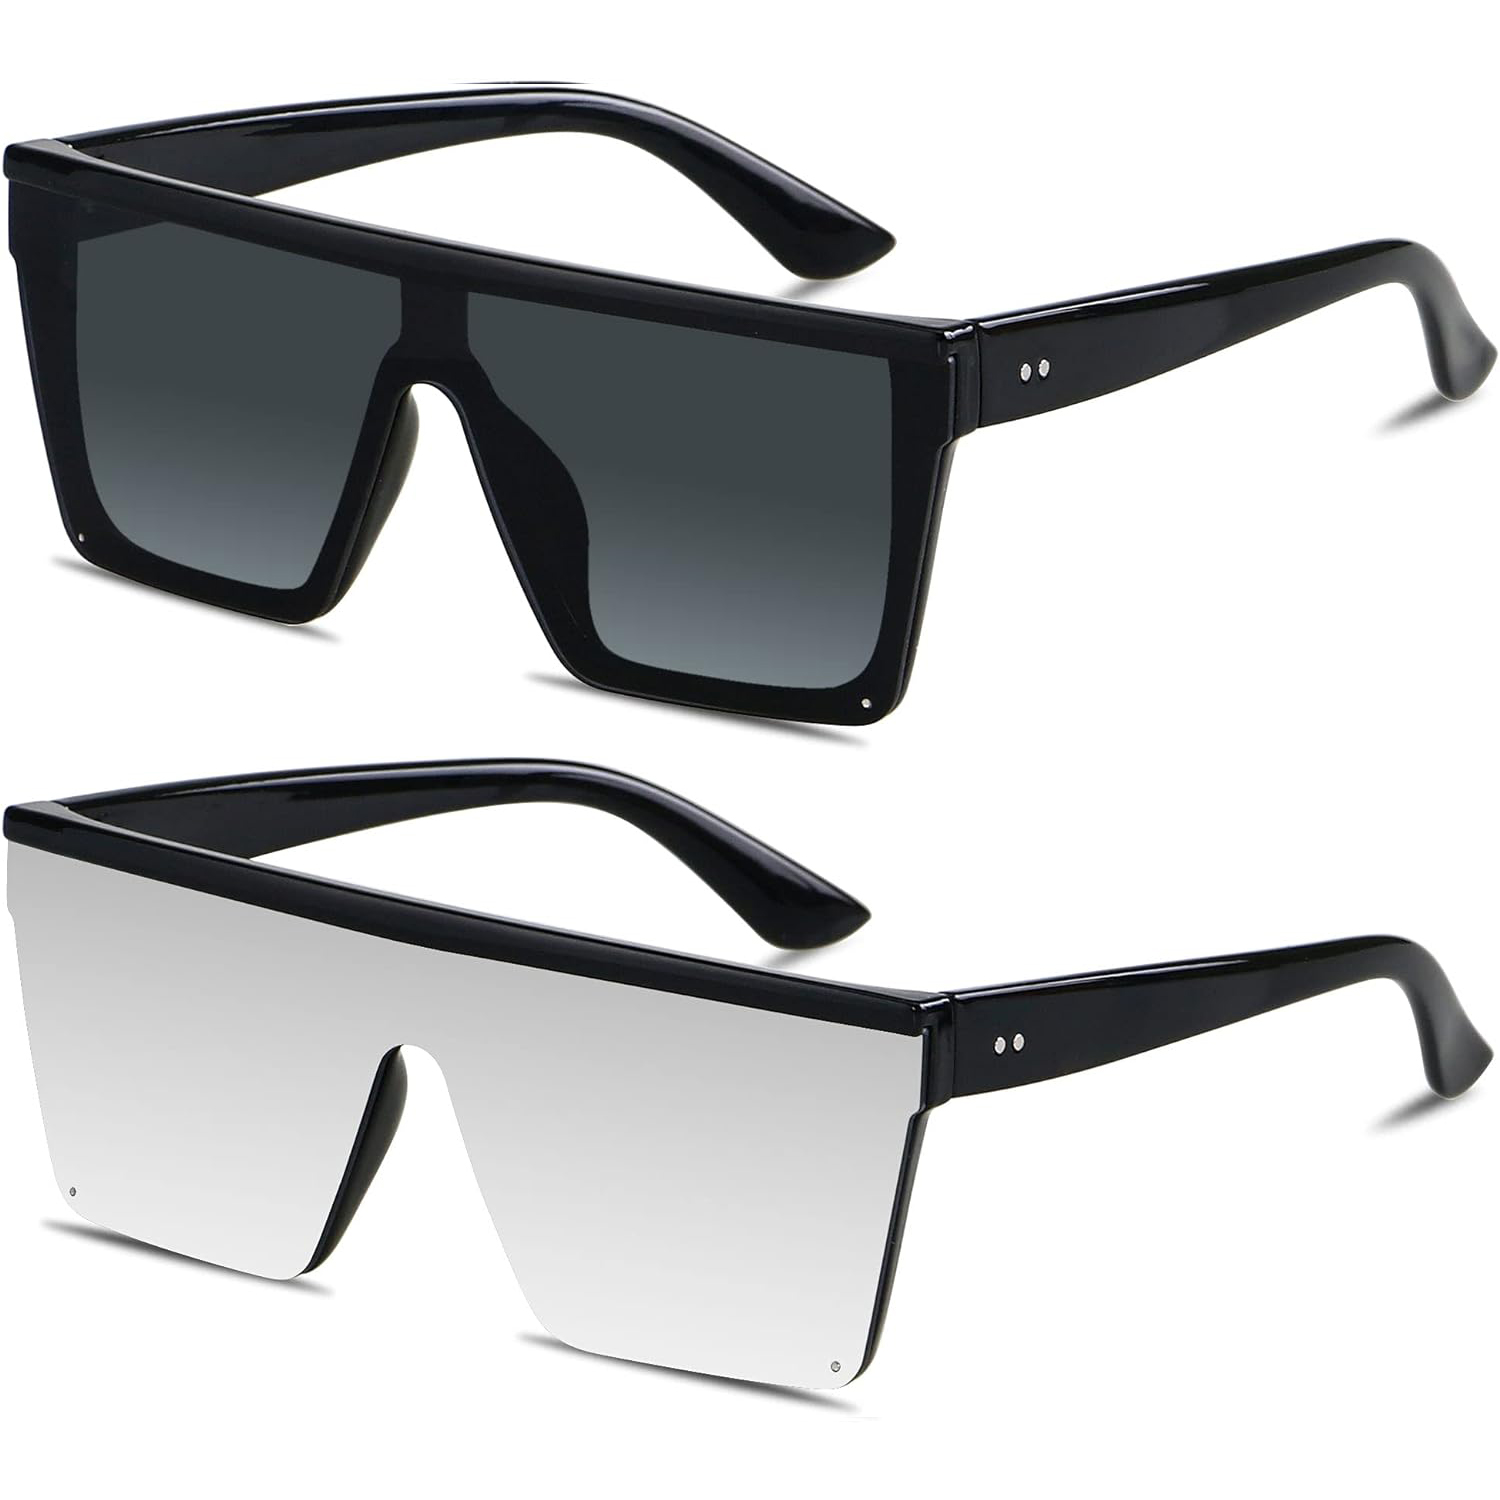 YFYTRE Square Oversized Sunglasses for Women Men Big Flat Top Fashion ...